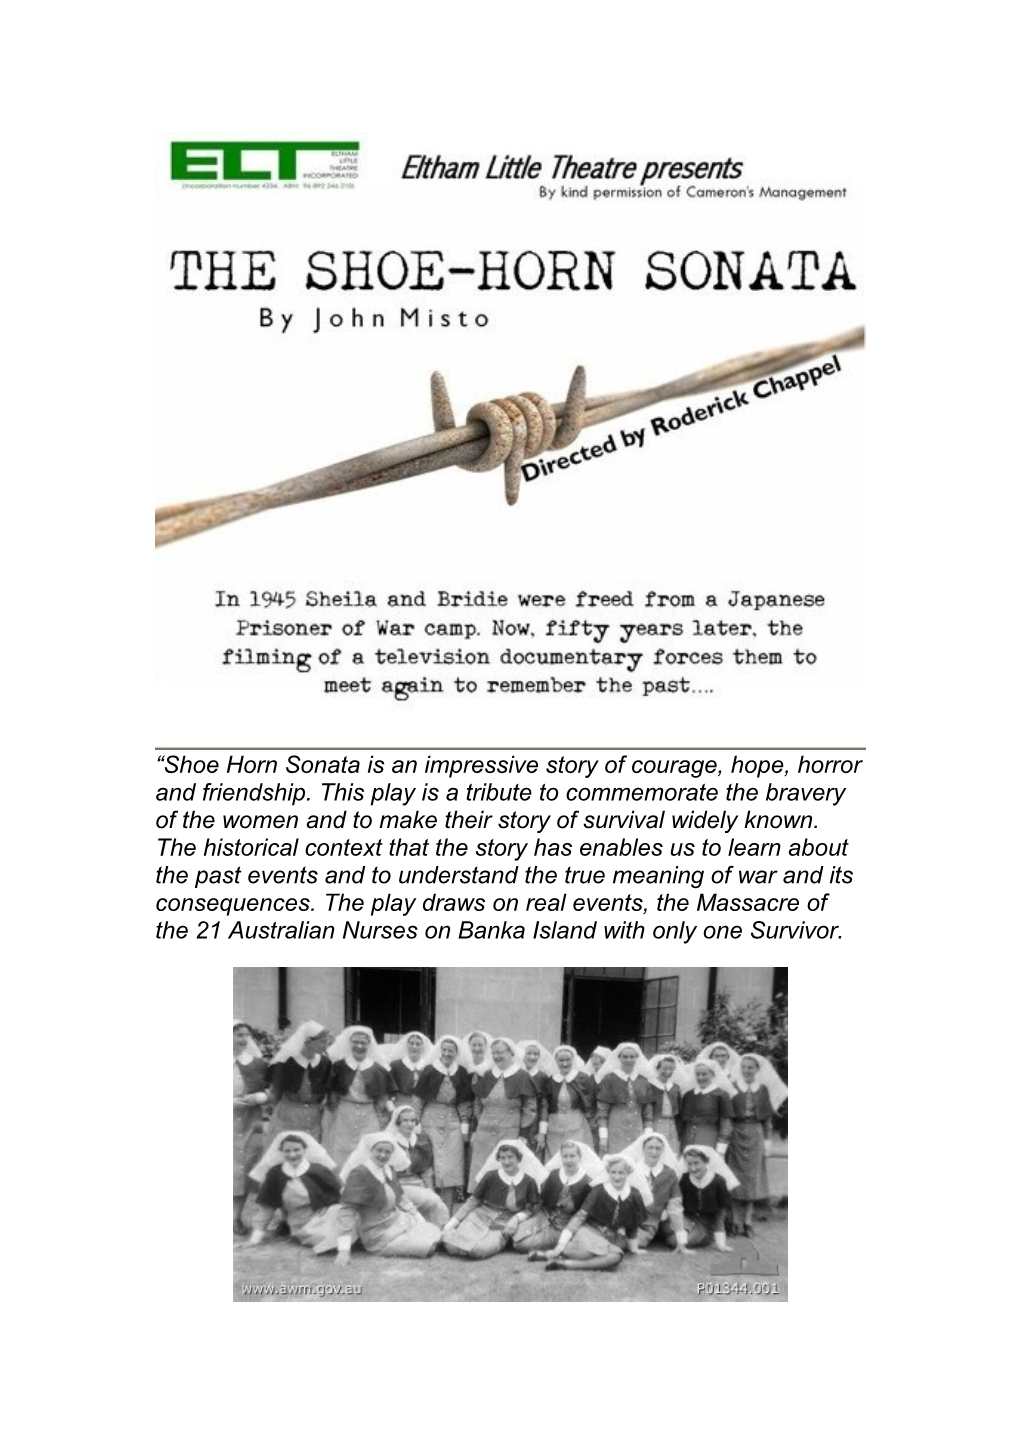 Shoe Horn Sonata